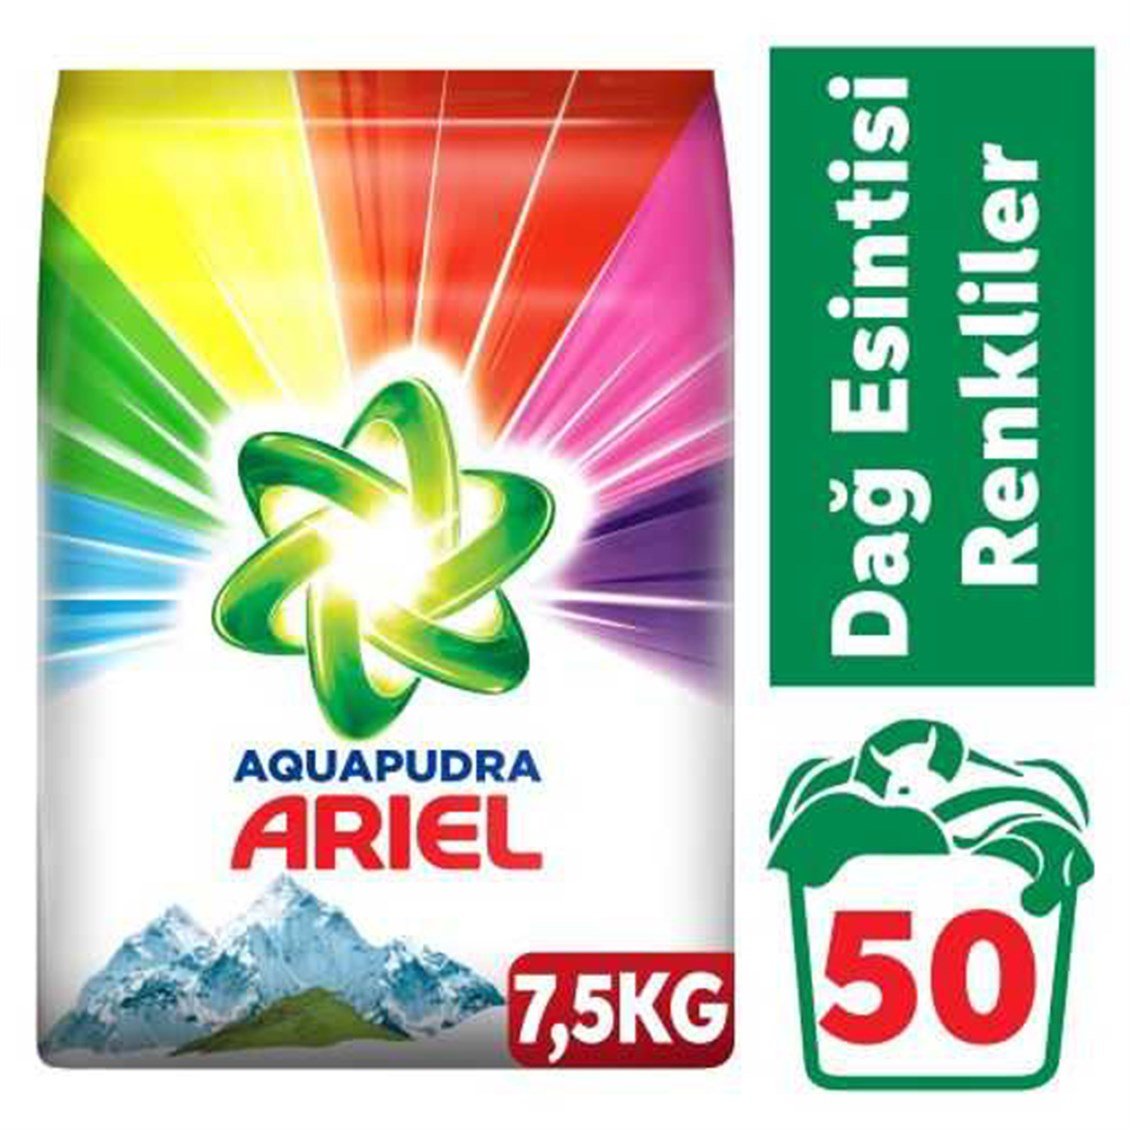 Ariel Aquapudra Renkliler Toz Deterjan 7.5 kg - Onur Market